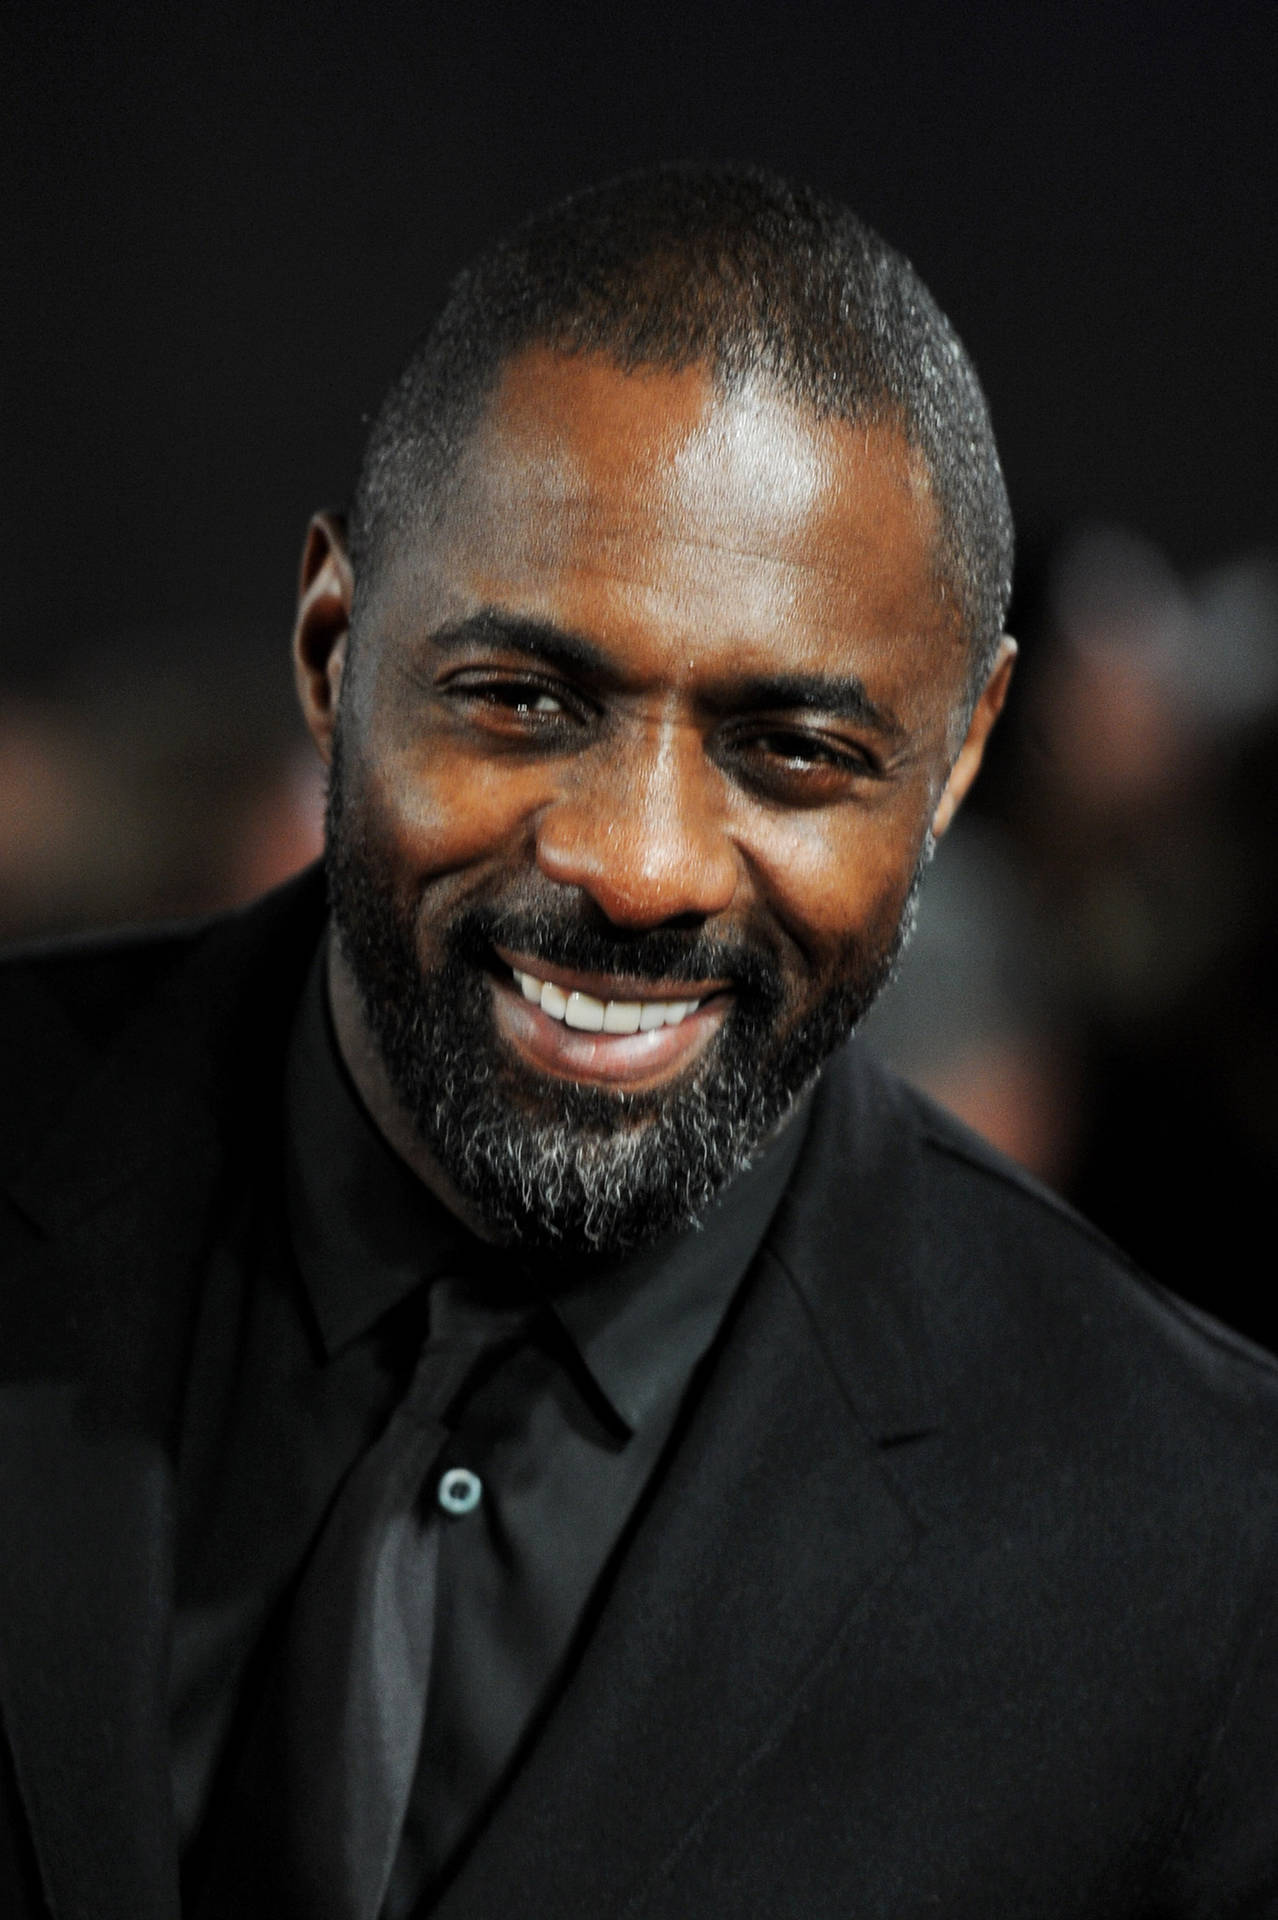 Idris Elba Against Blurry Dark Backdrop Wallpaper